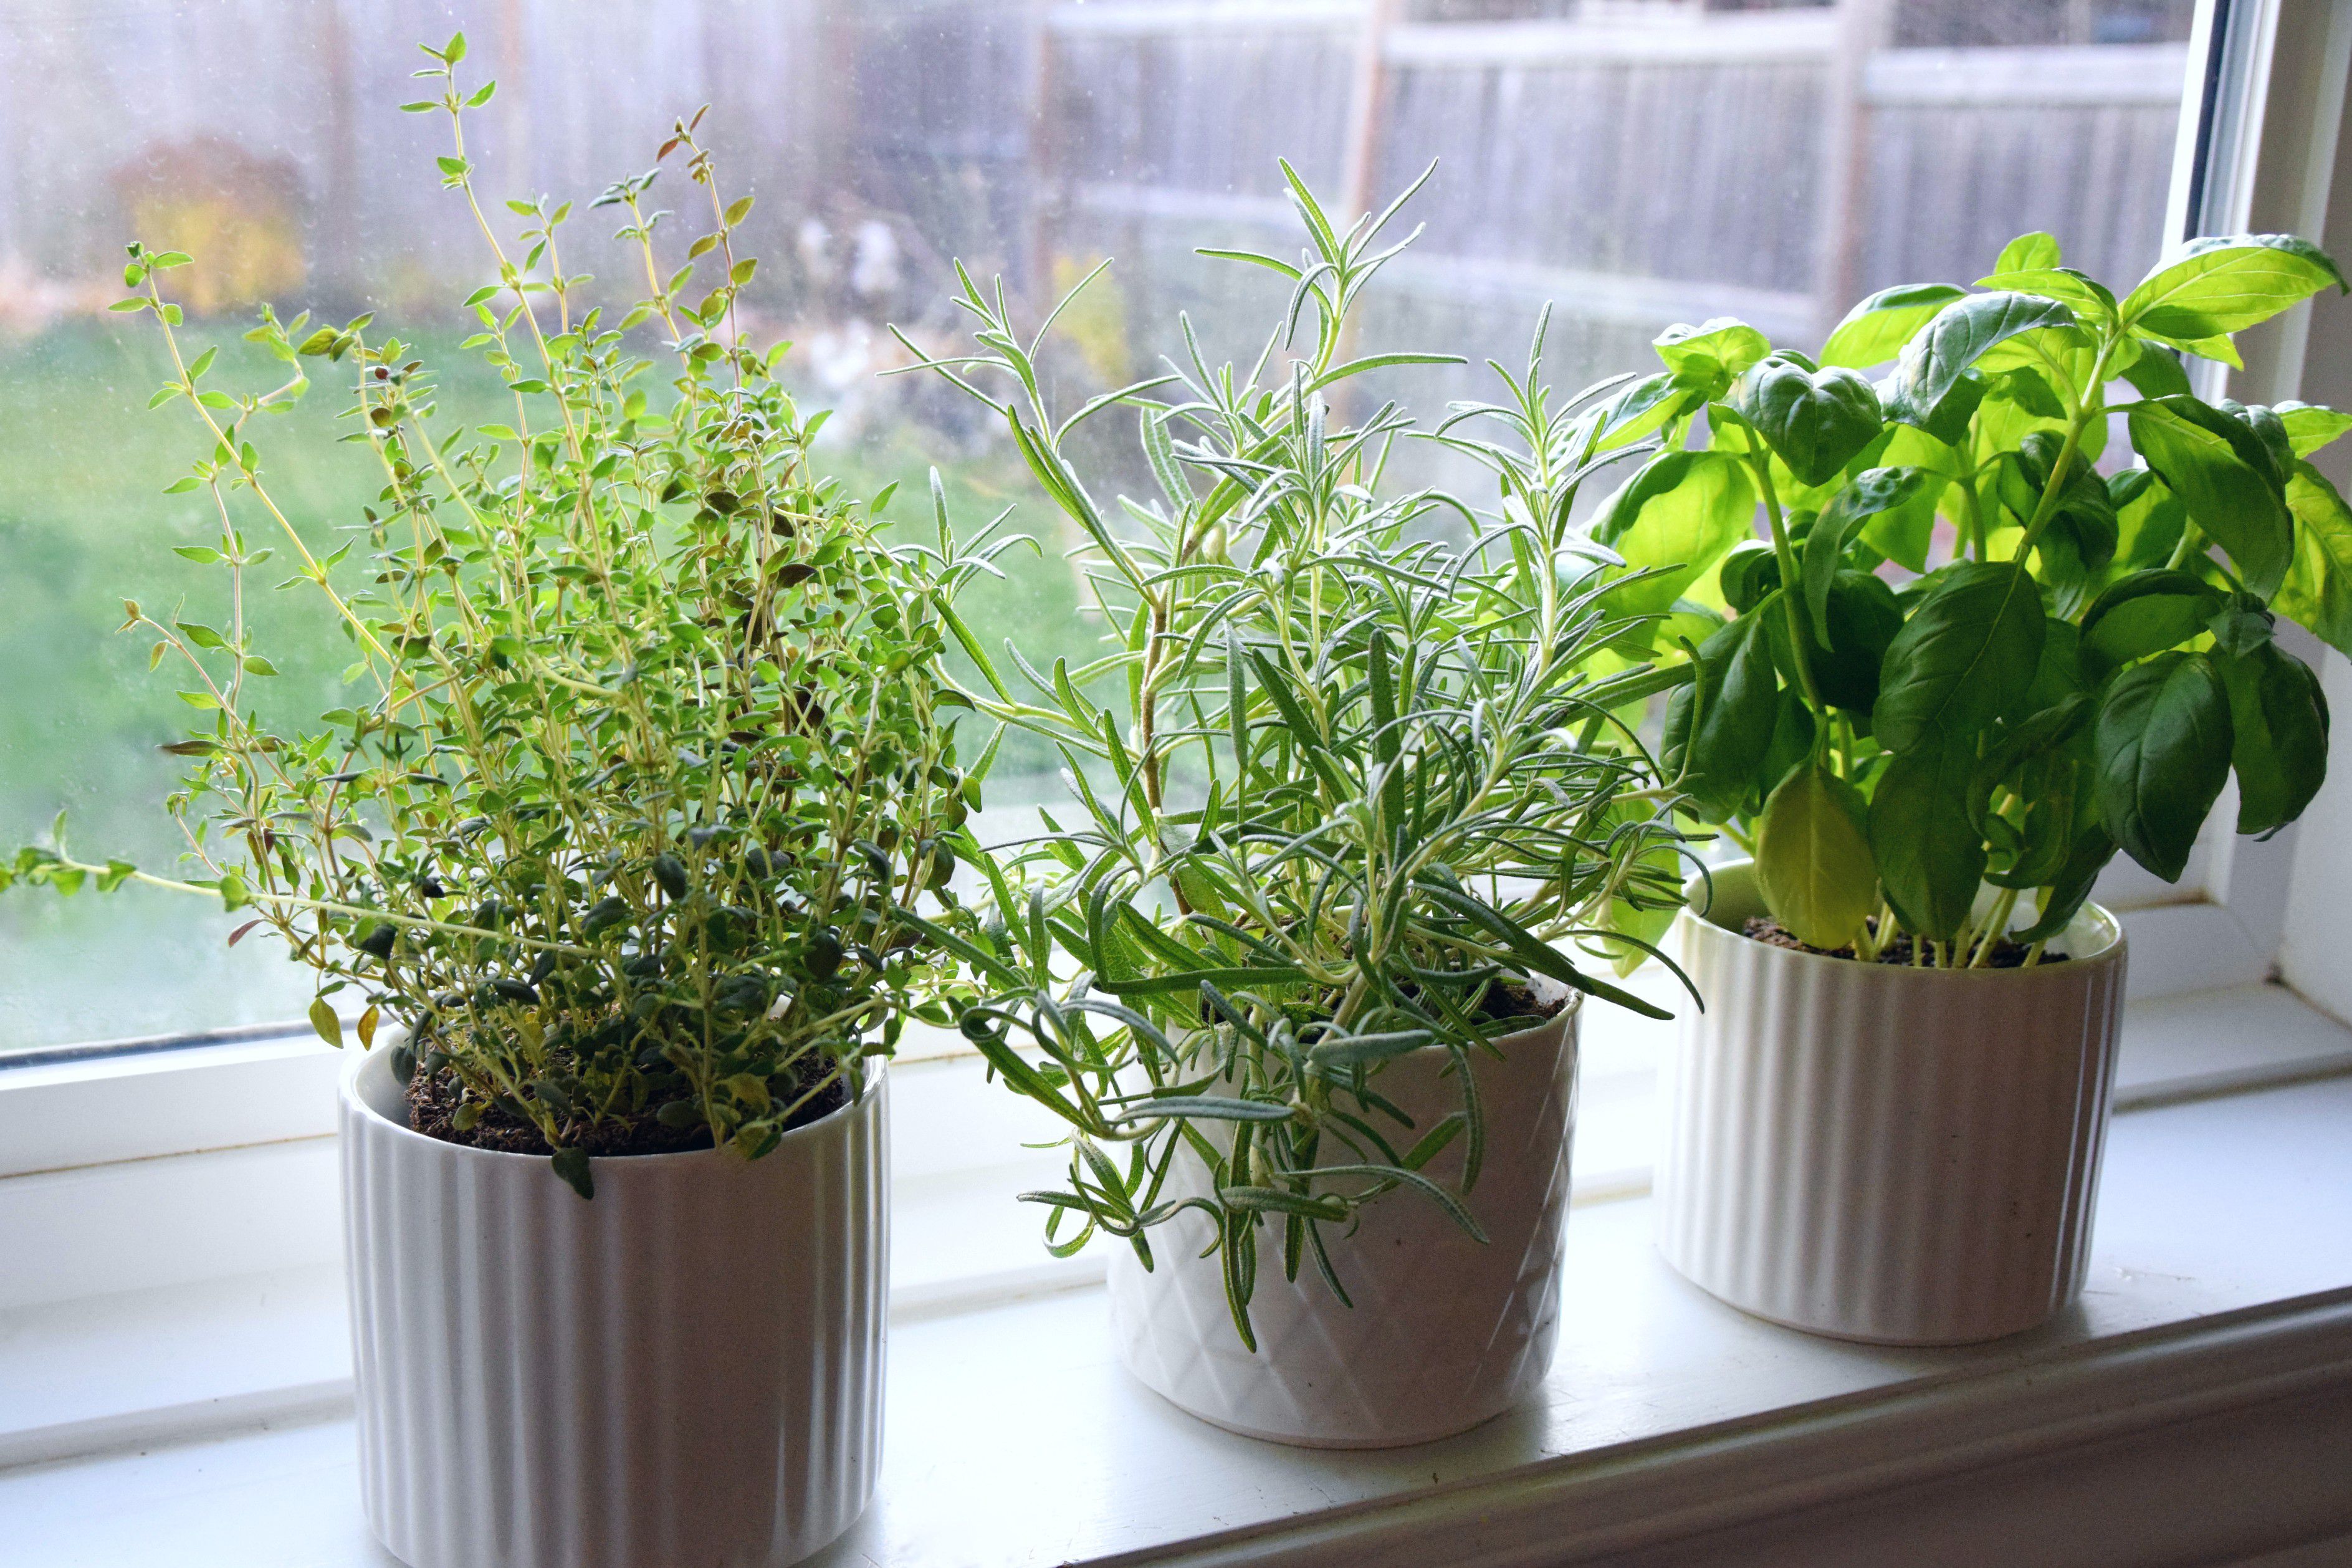 How to Plant an Indoor Kitchen Herb Garden